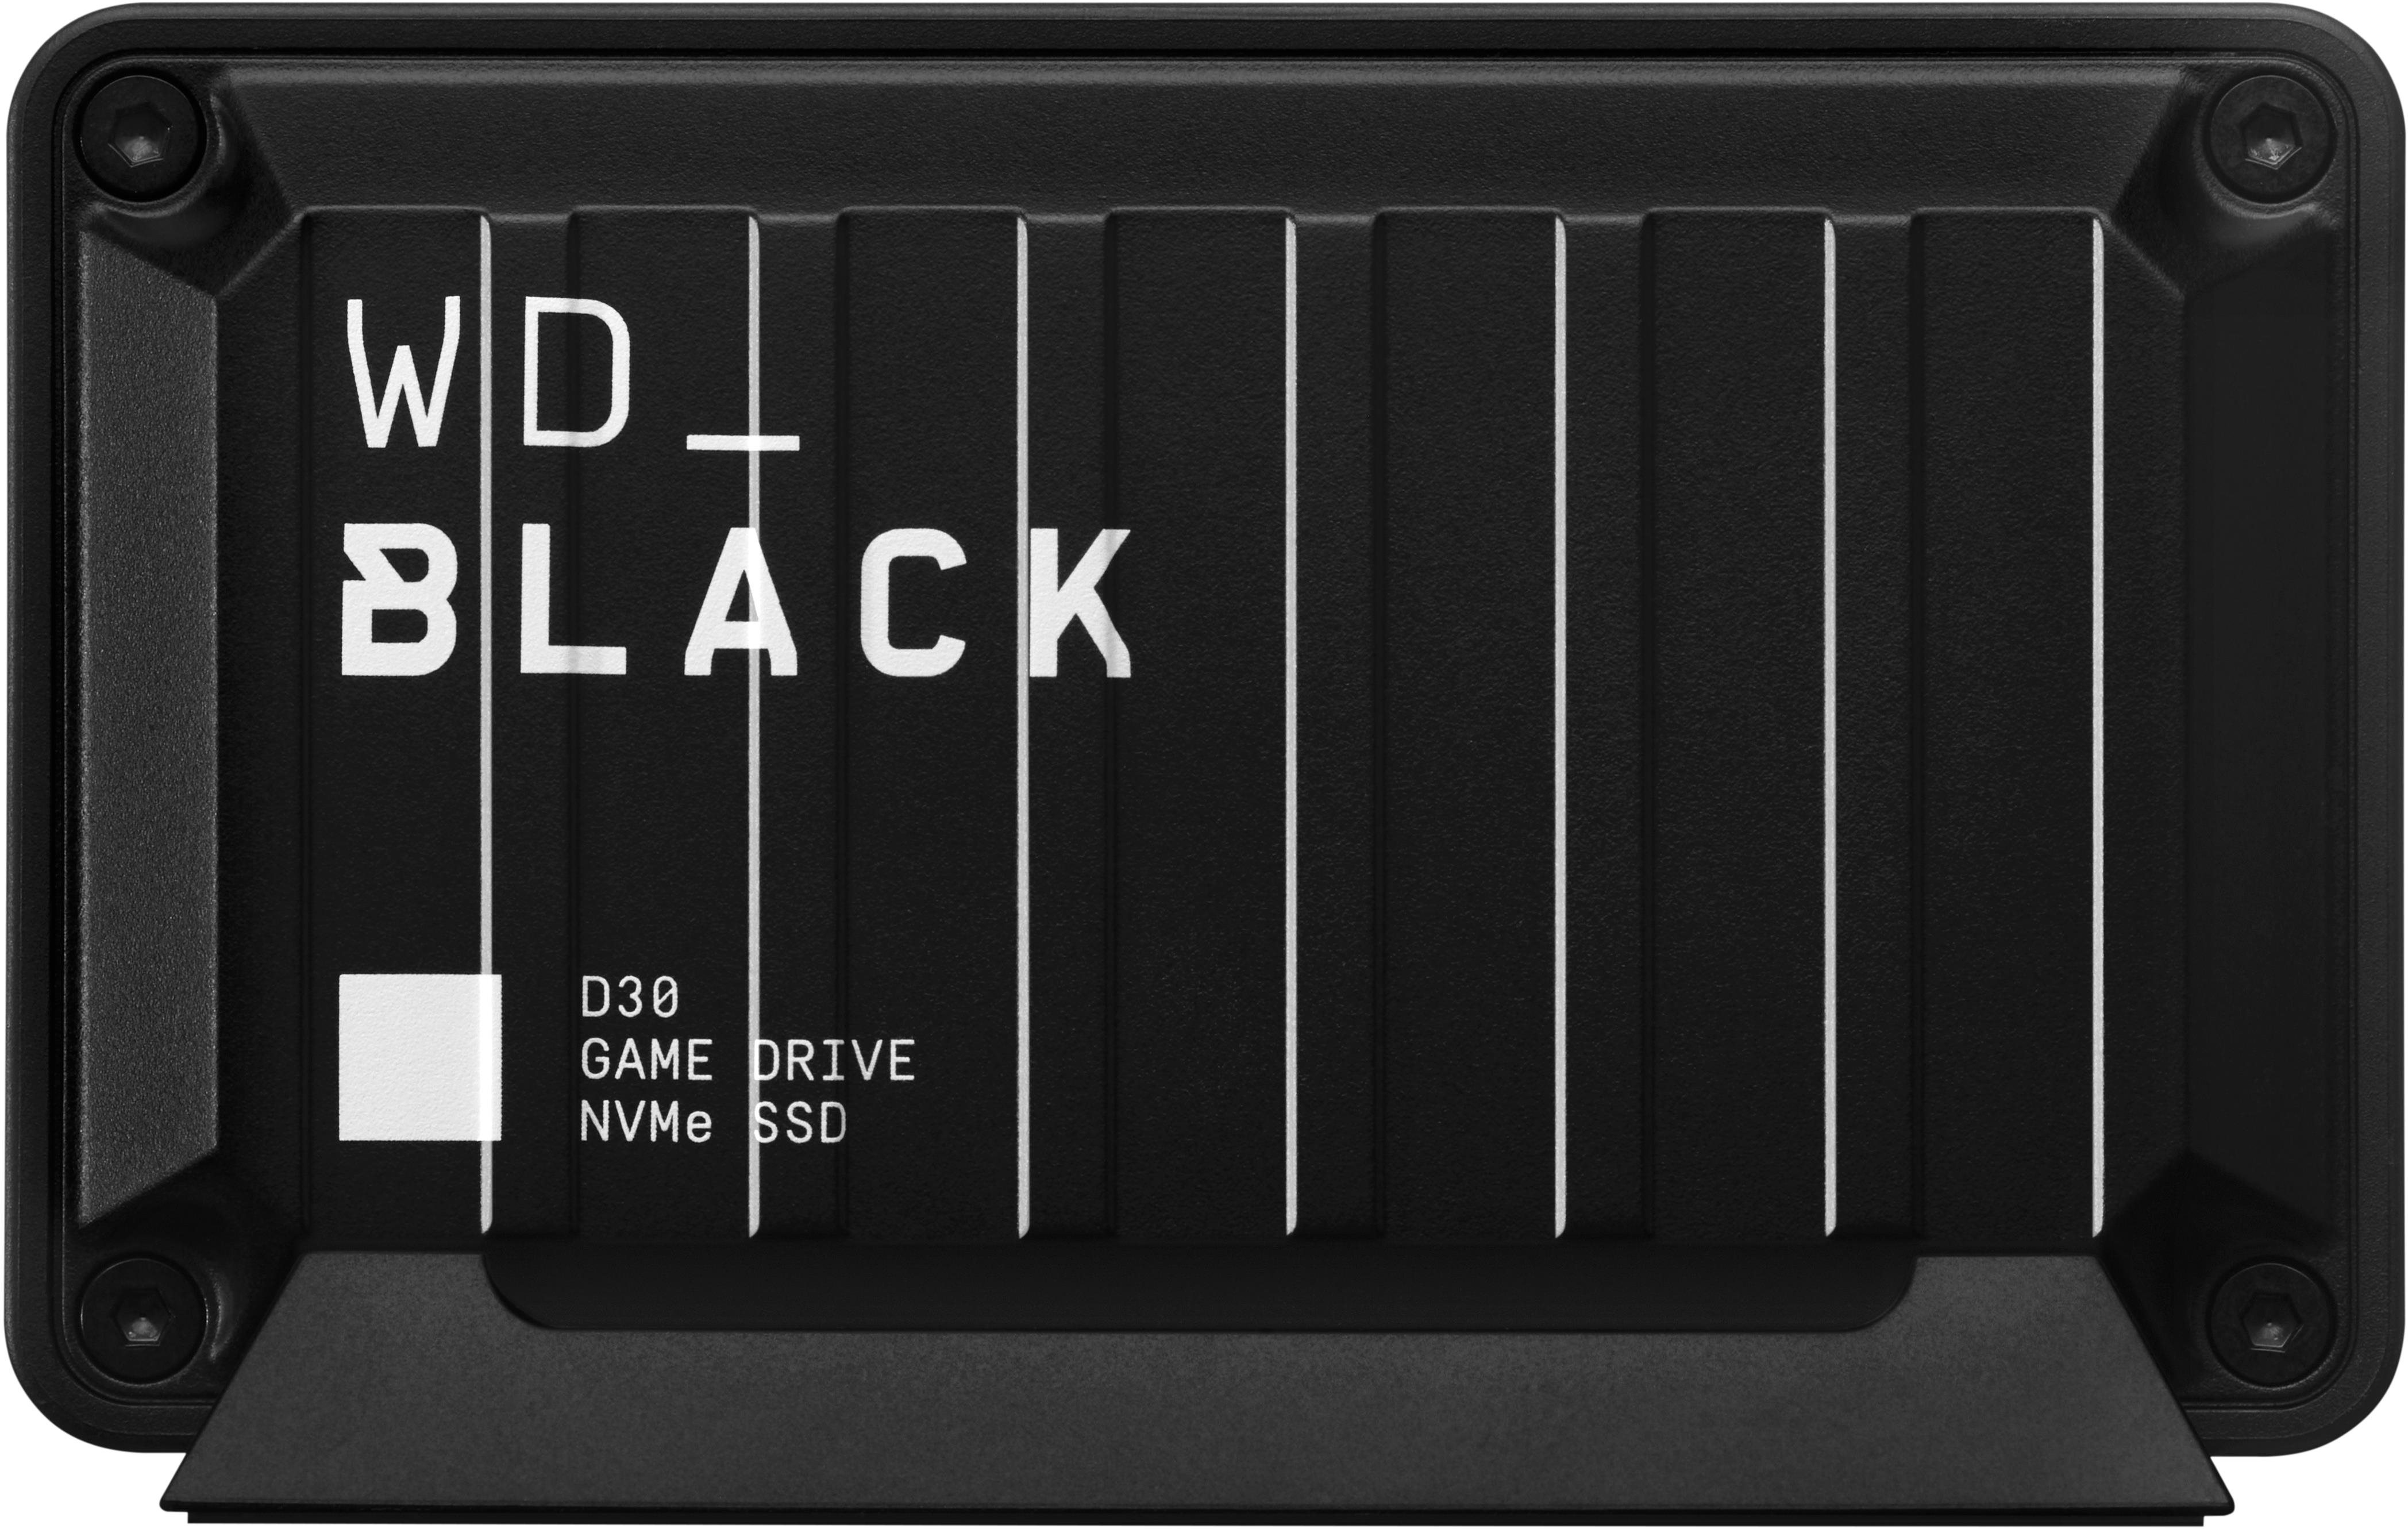 External Hard Drive WD BLACK D30 1TB Screen